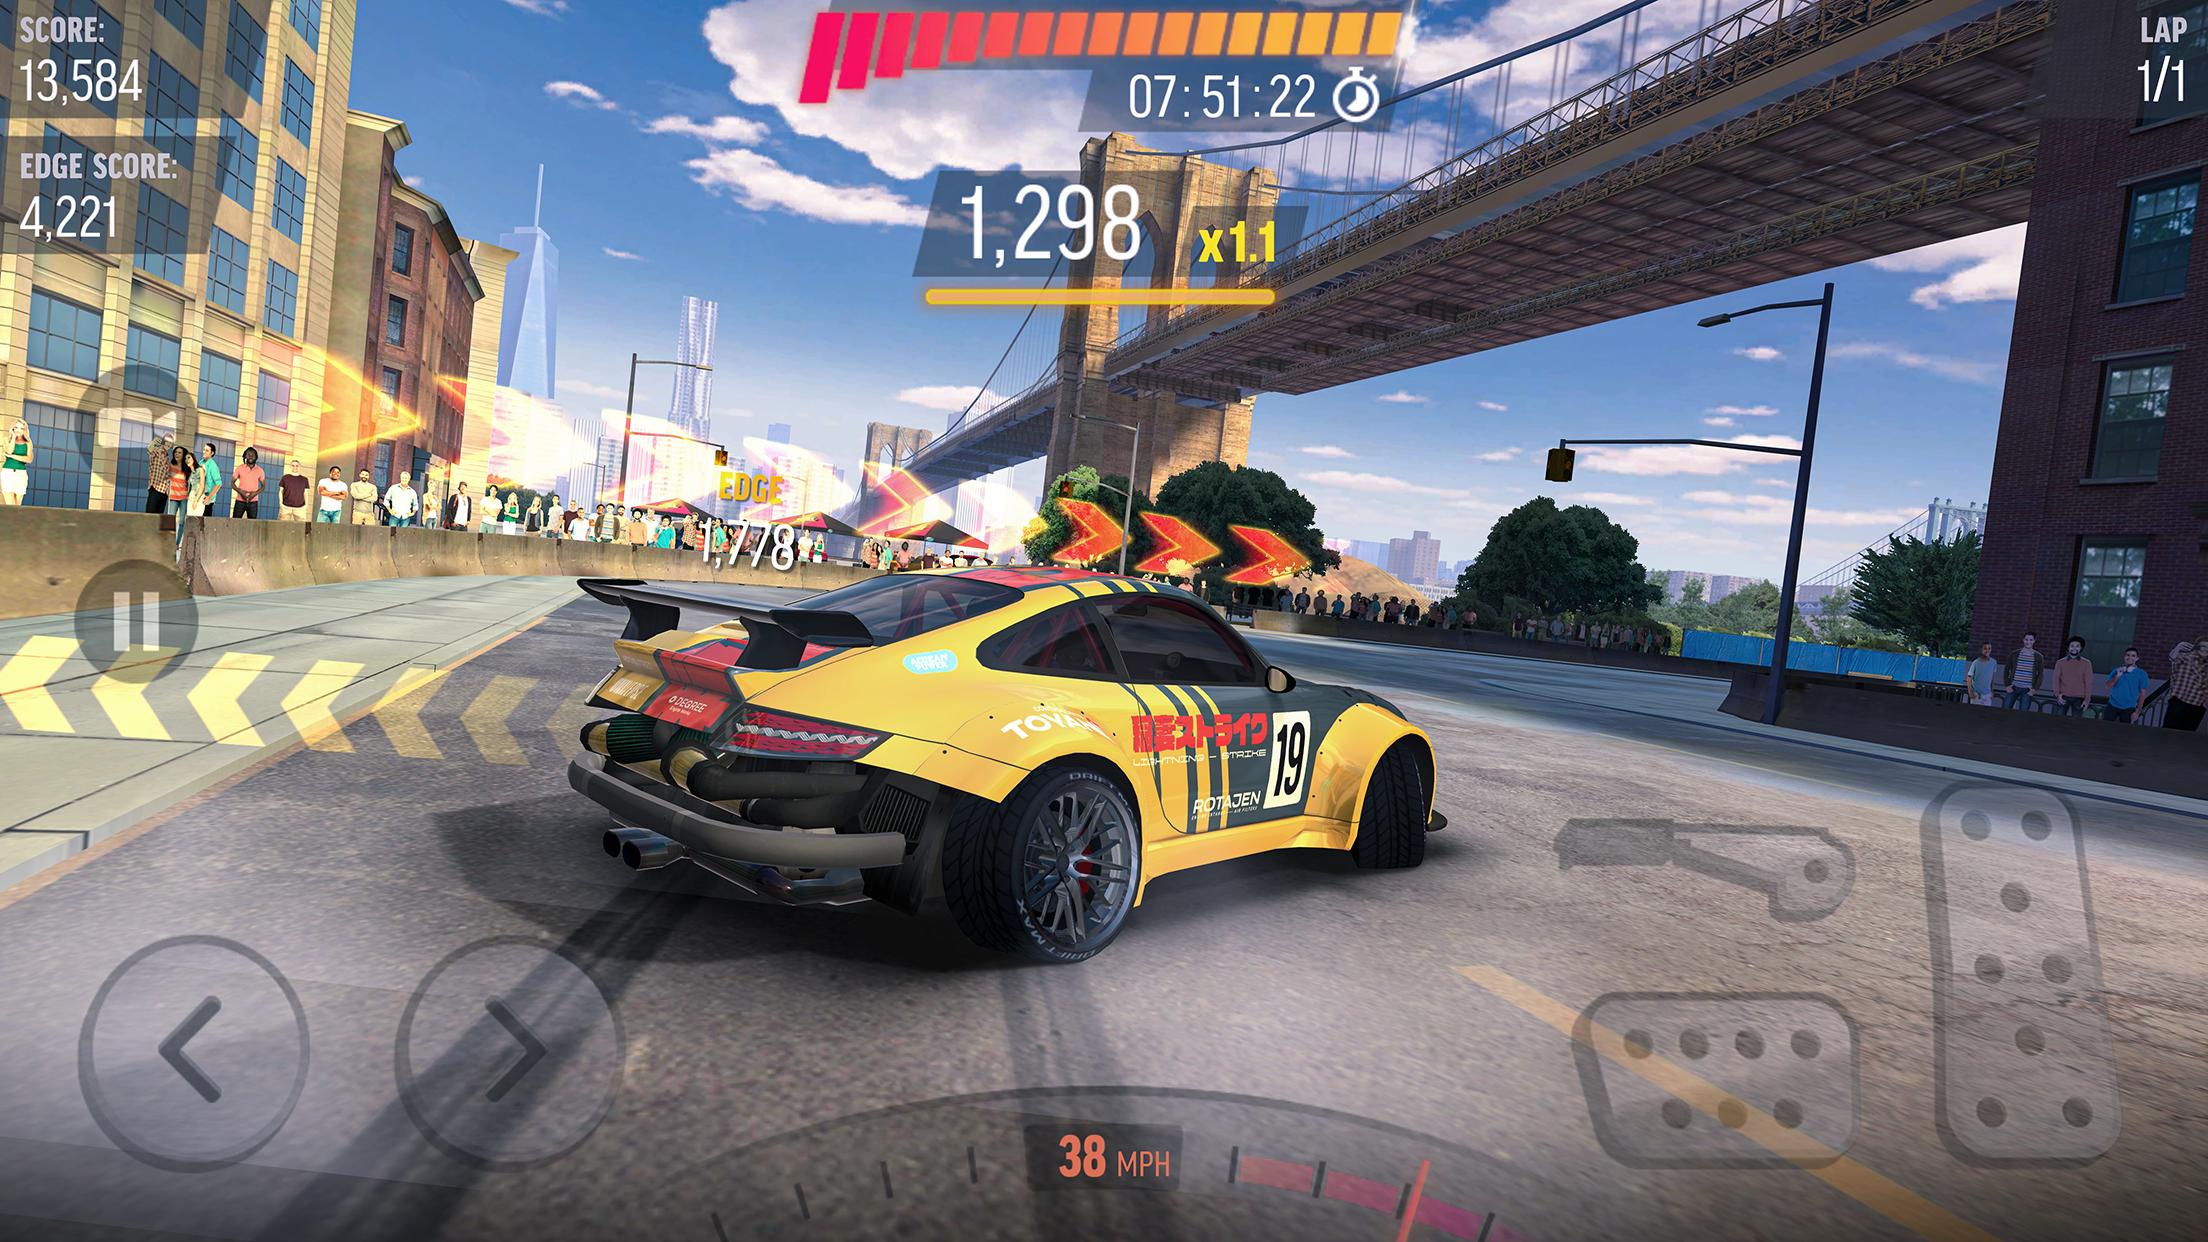 Drift Max Pro Car Drifting Game with Racing Cars 2.4.60 Screenshot 2